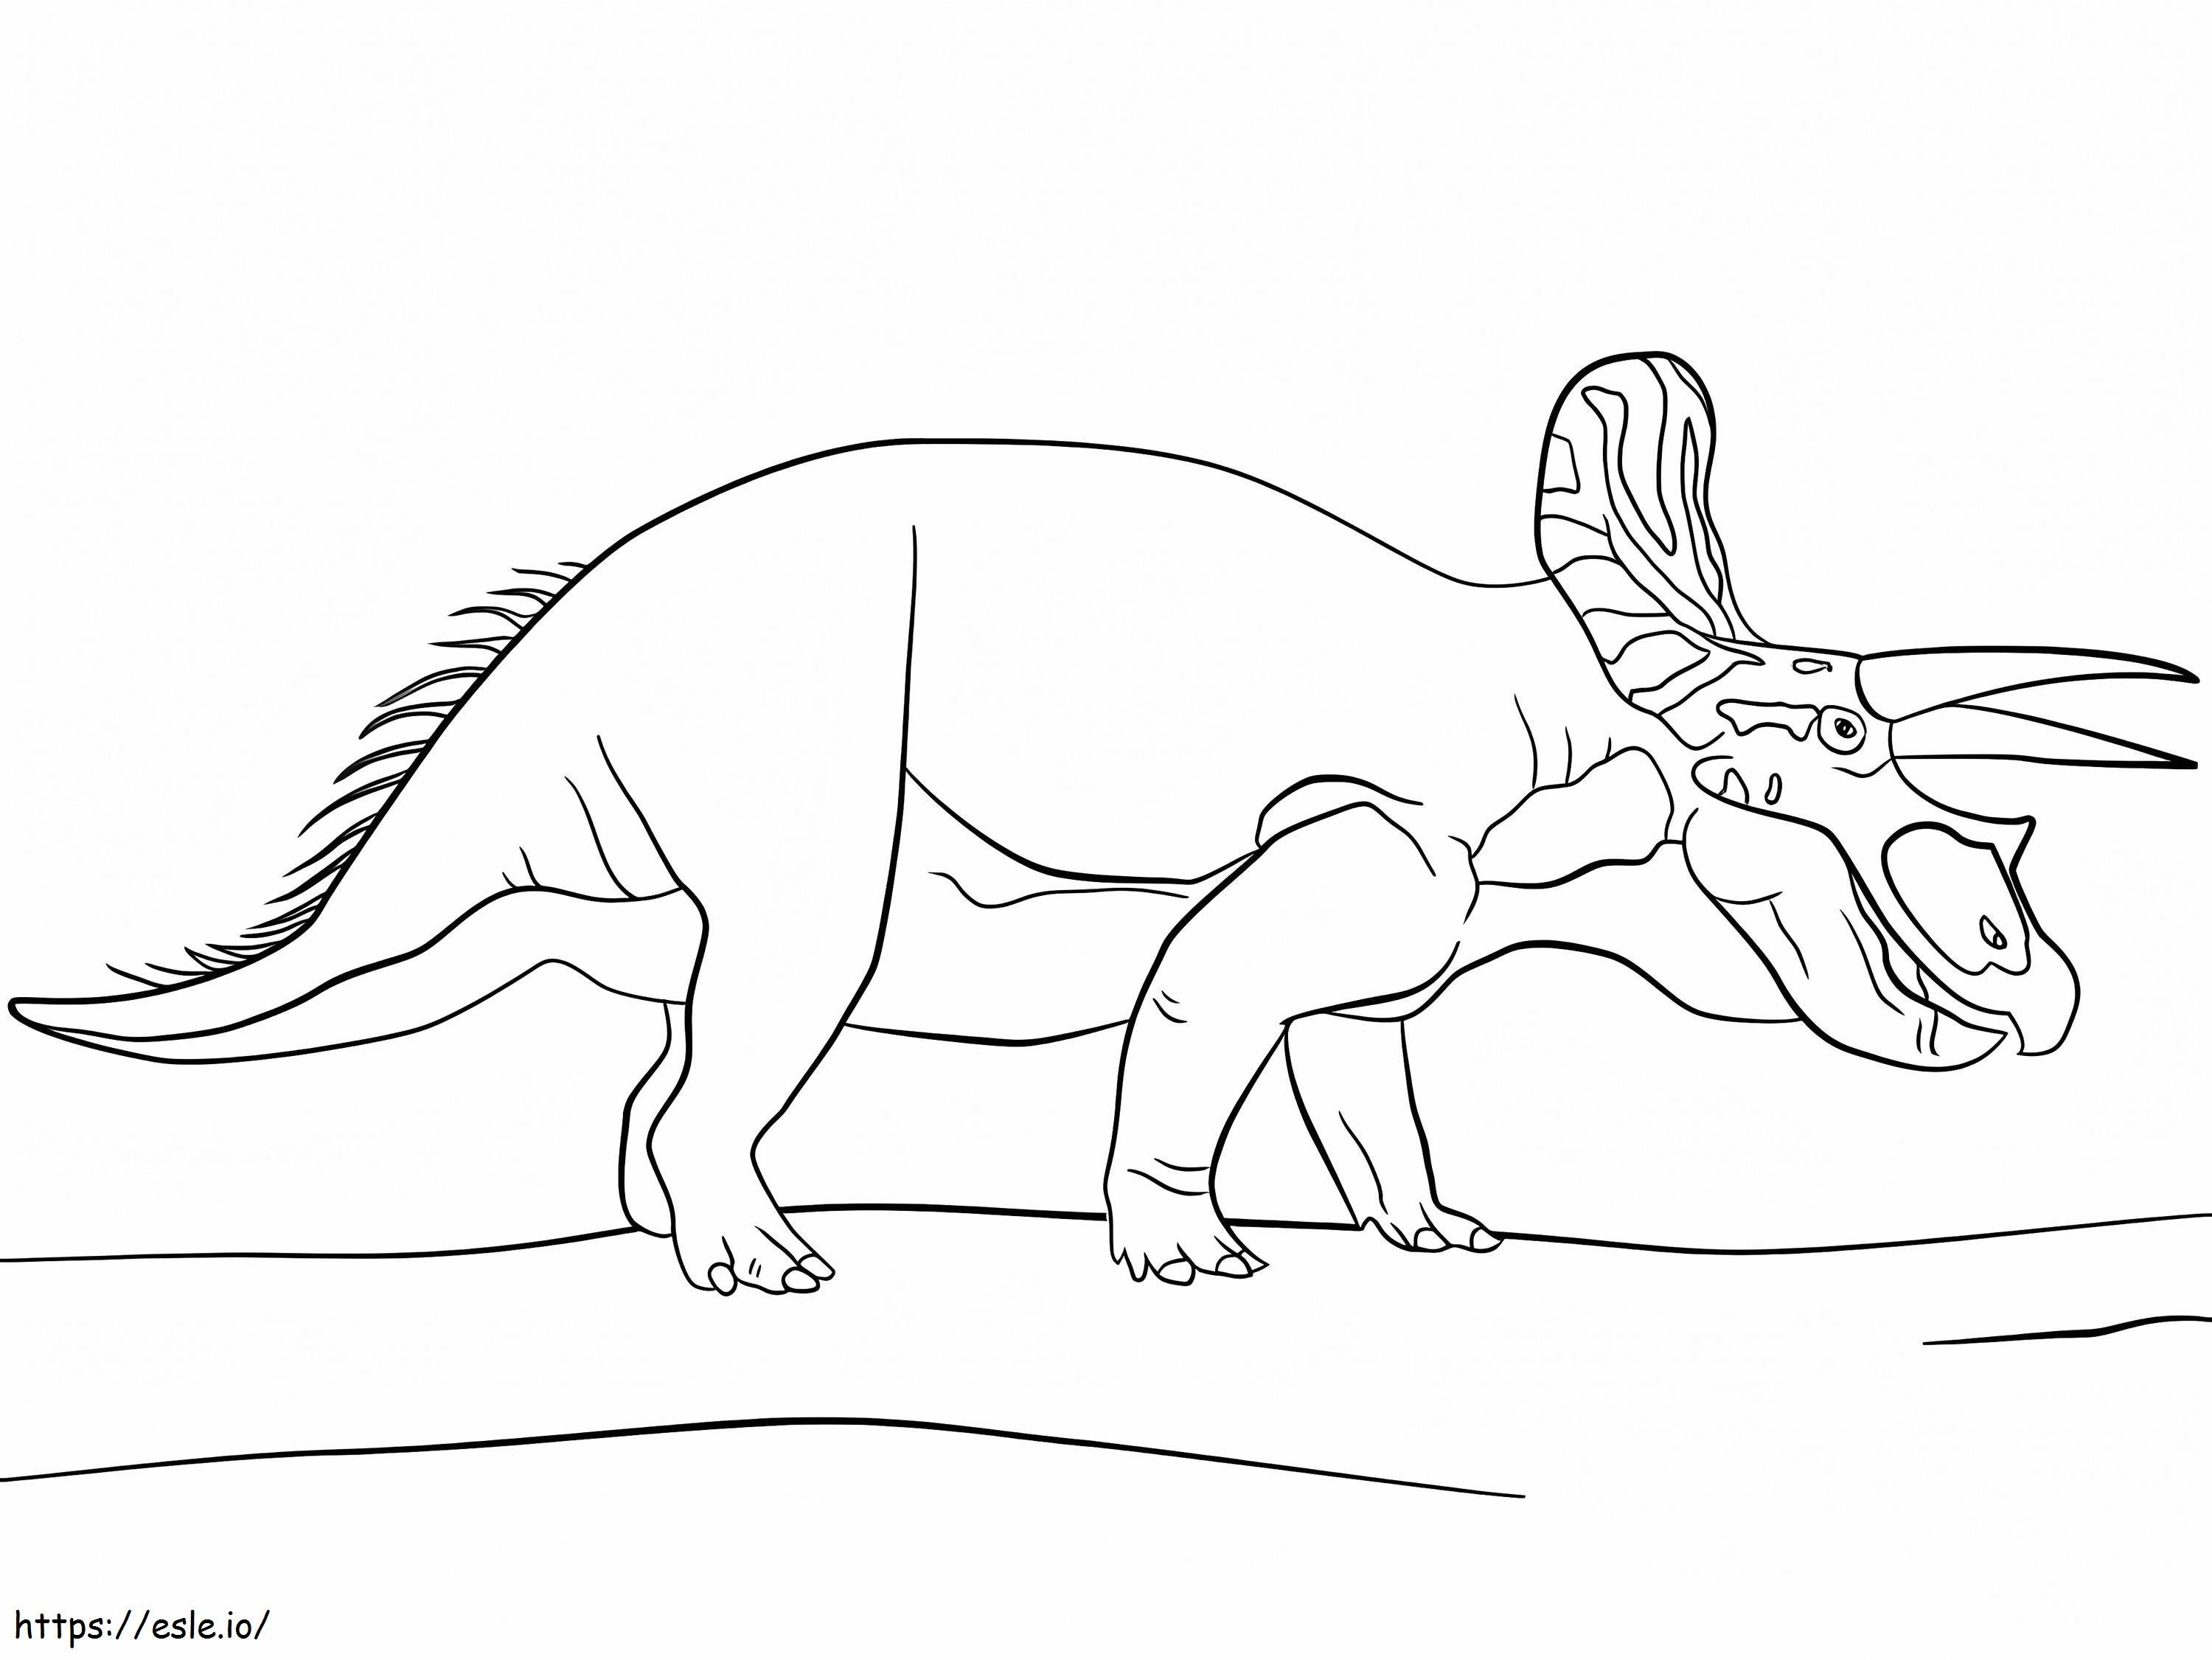 Coloriage Coloriage Jurassic Park Triceratops à imprimer dessin